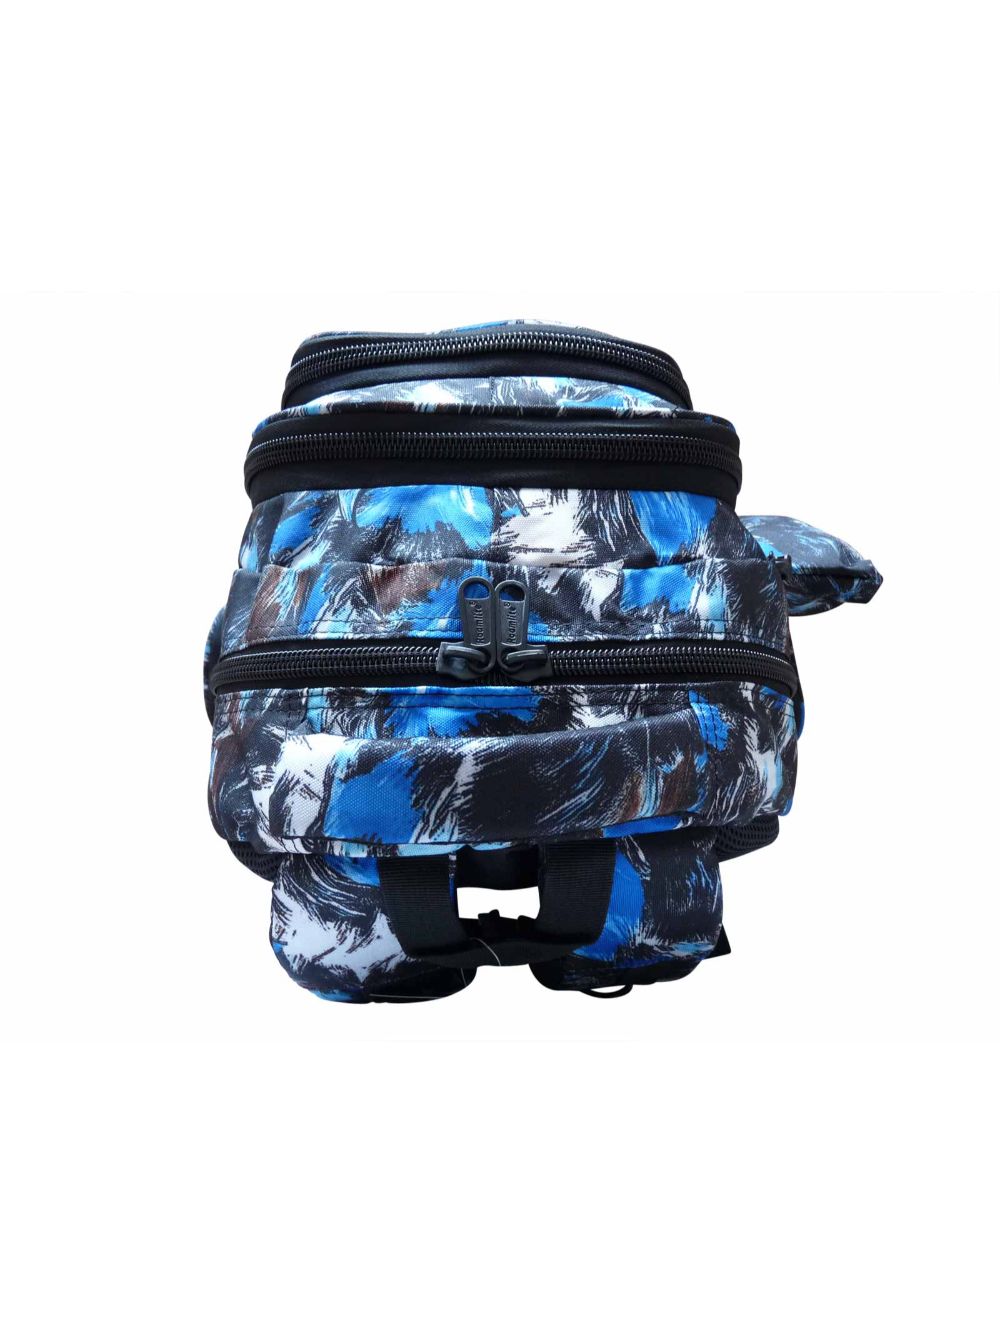 Roamlite Childrens Backpack Blue Paint pattern RL839  top